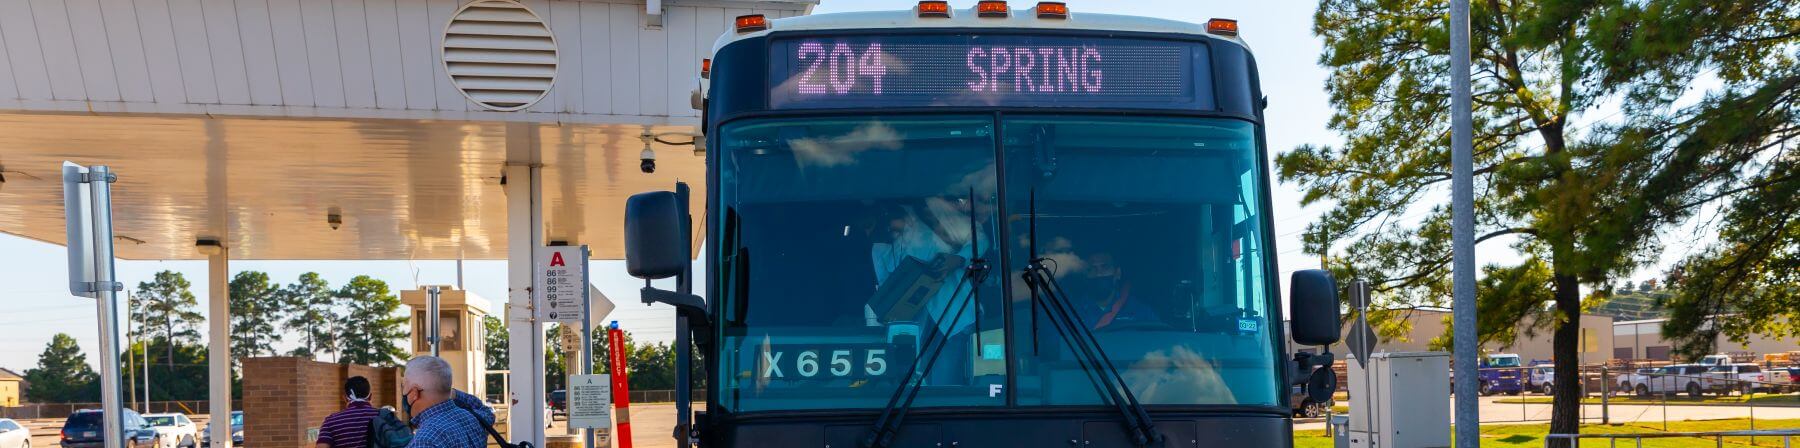 204 Spring Park & Ride Bus